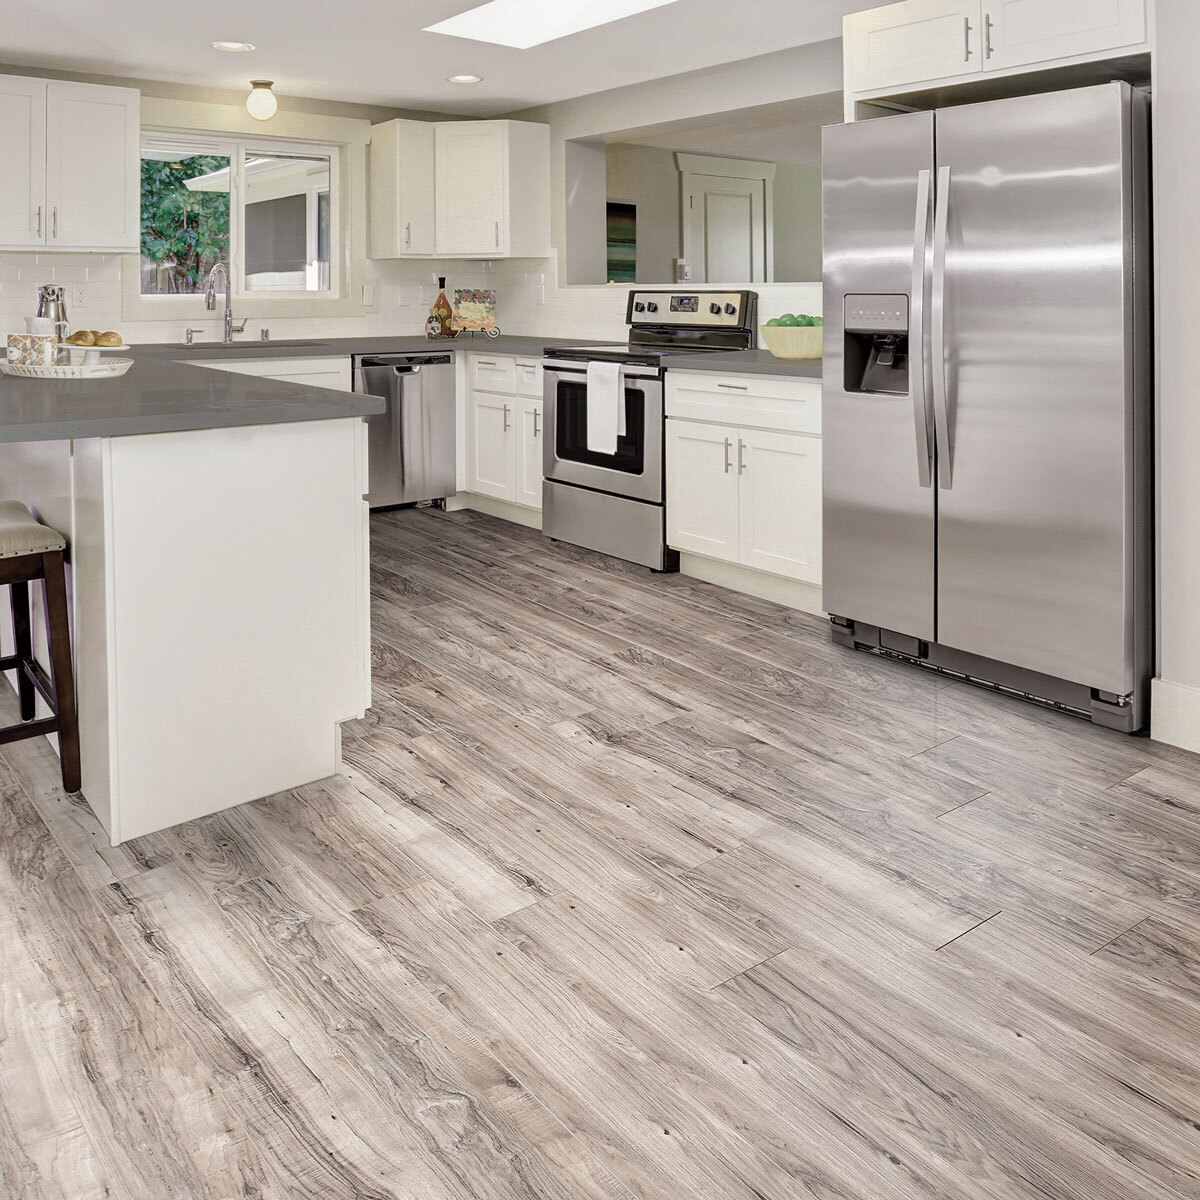 Ac5 Laminate Flooring, Grey Laminate Flooring In Kitchen